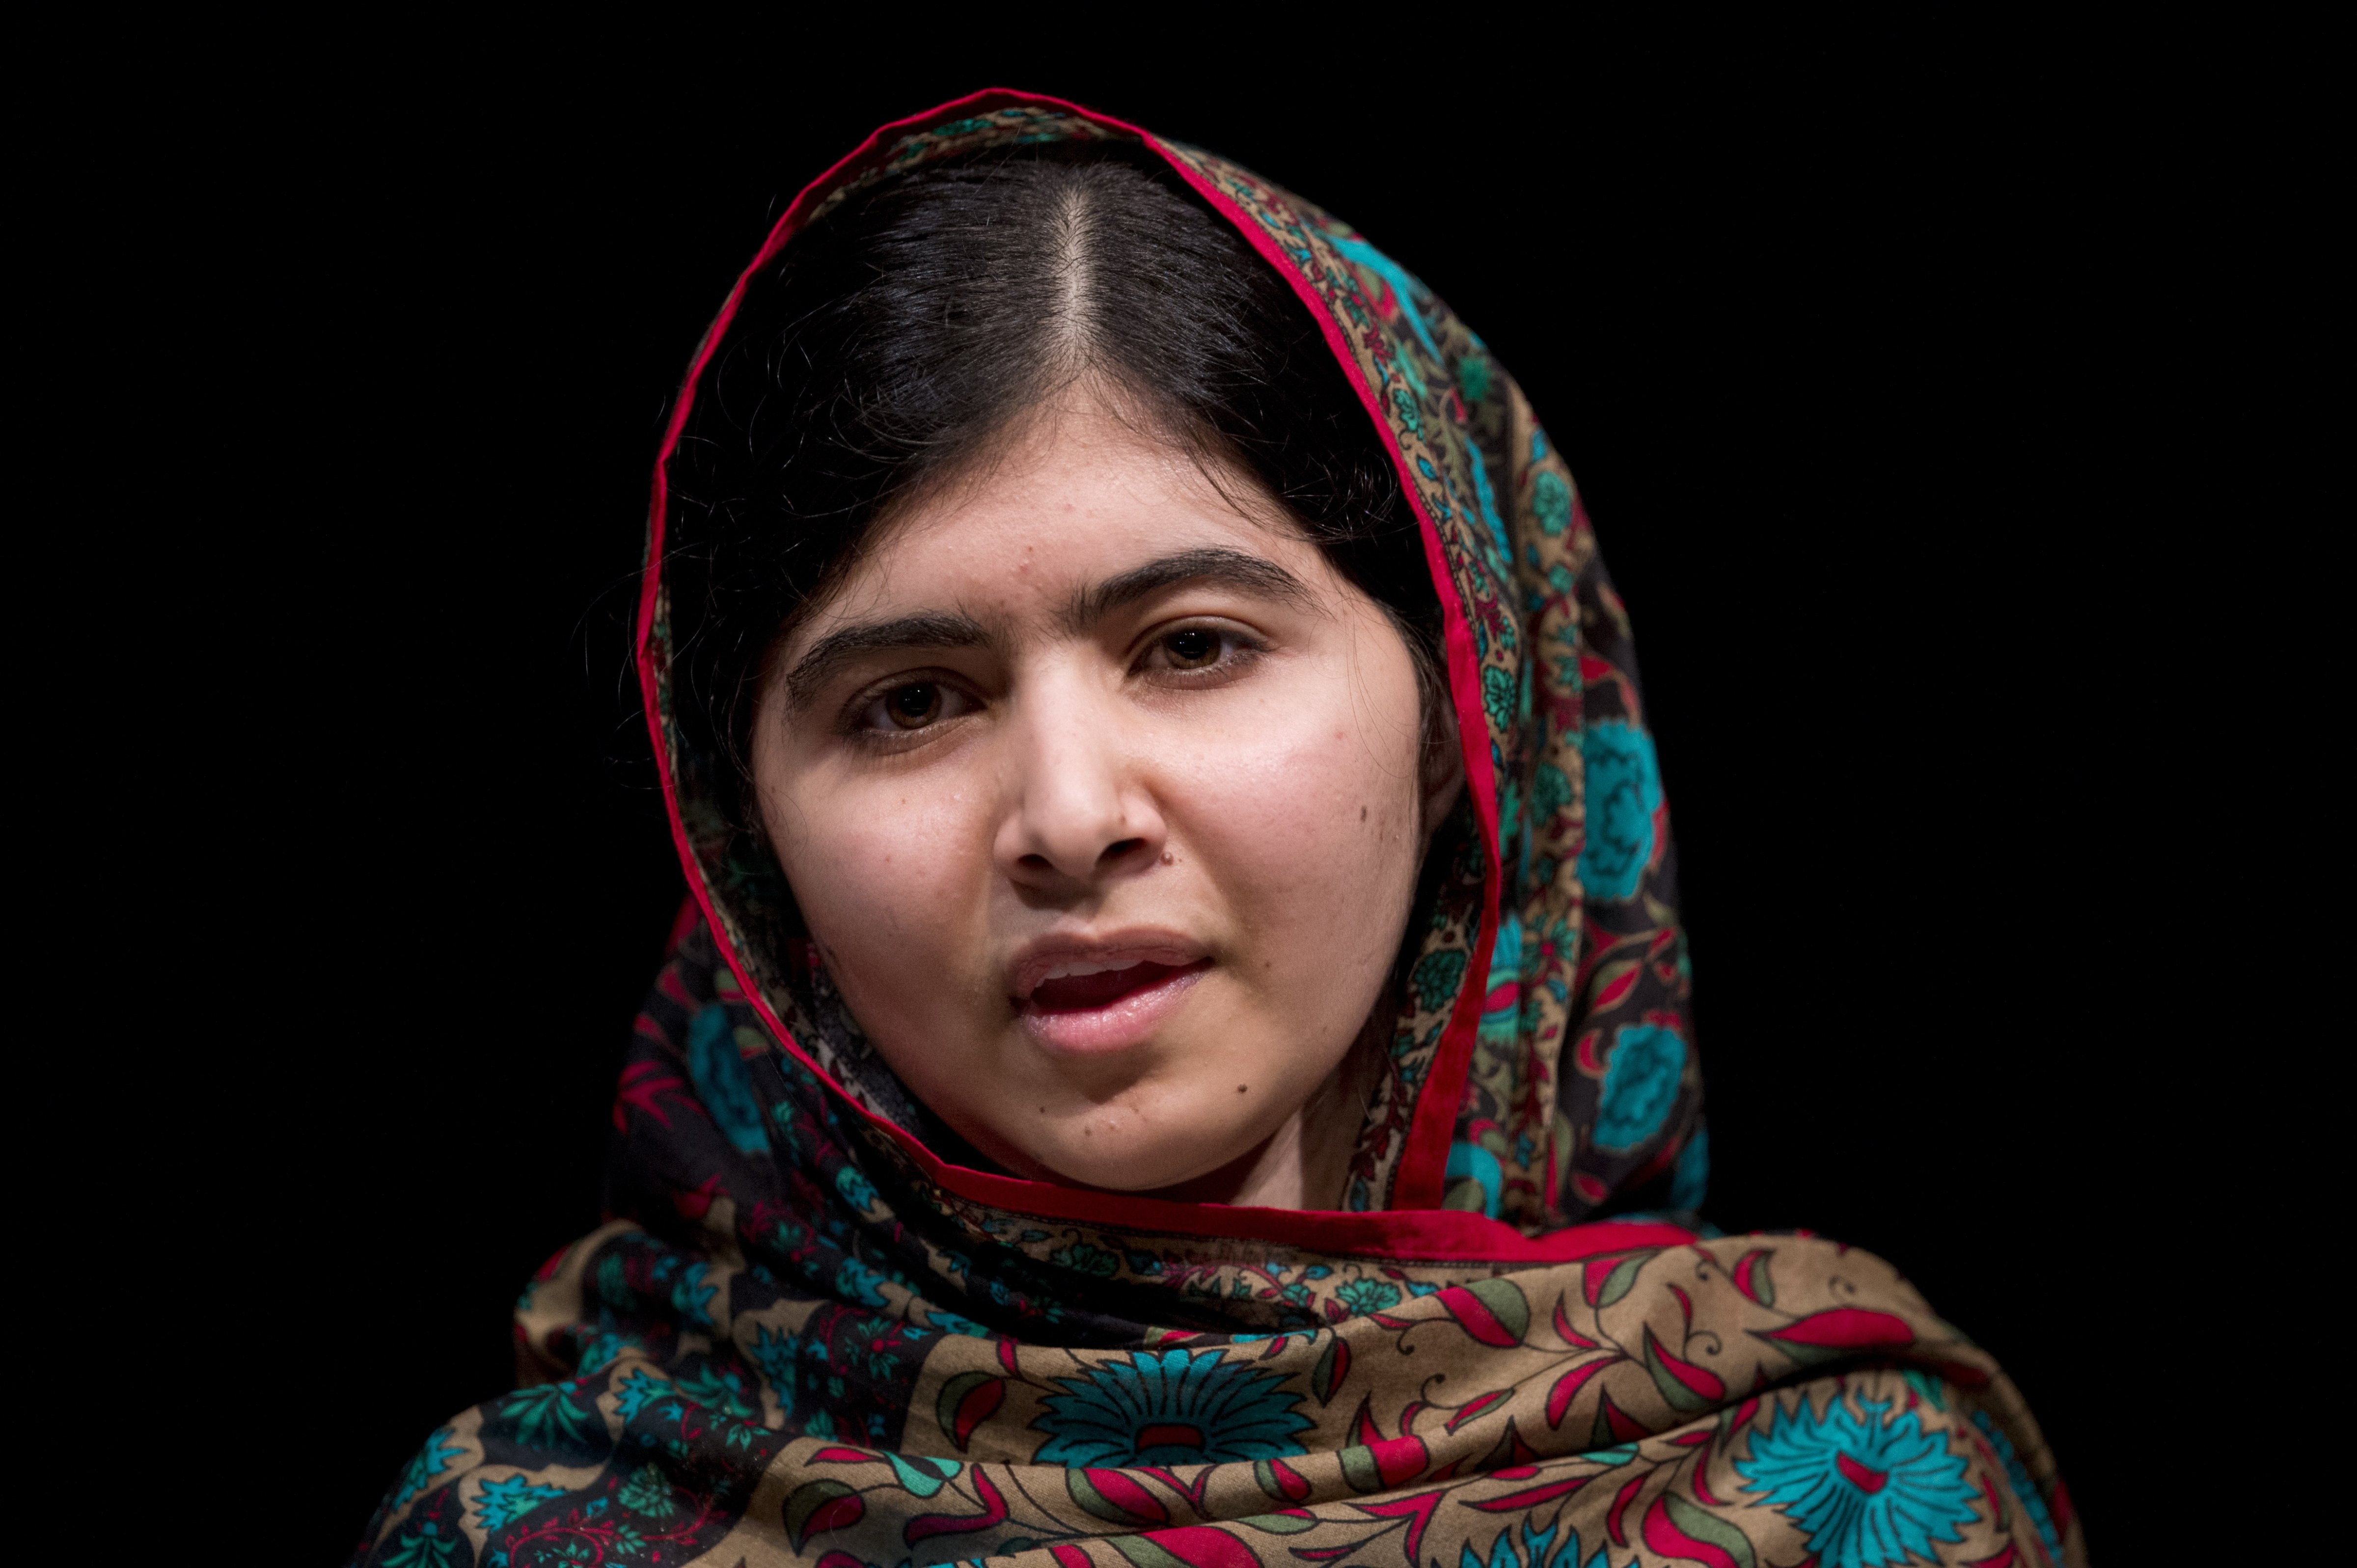 Pakistani rights activist Malala Yousafzai addresses the media in Birmingham, England on October 10, 2014.